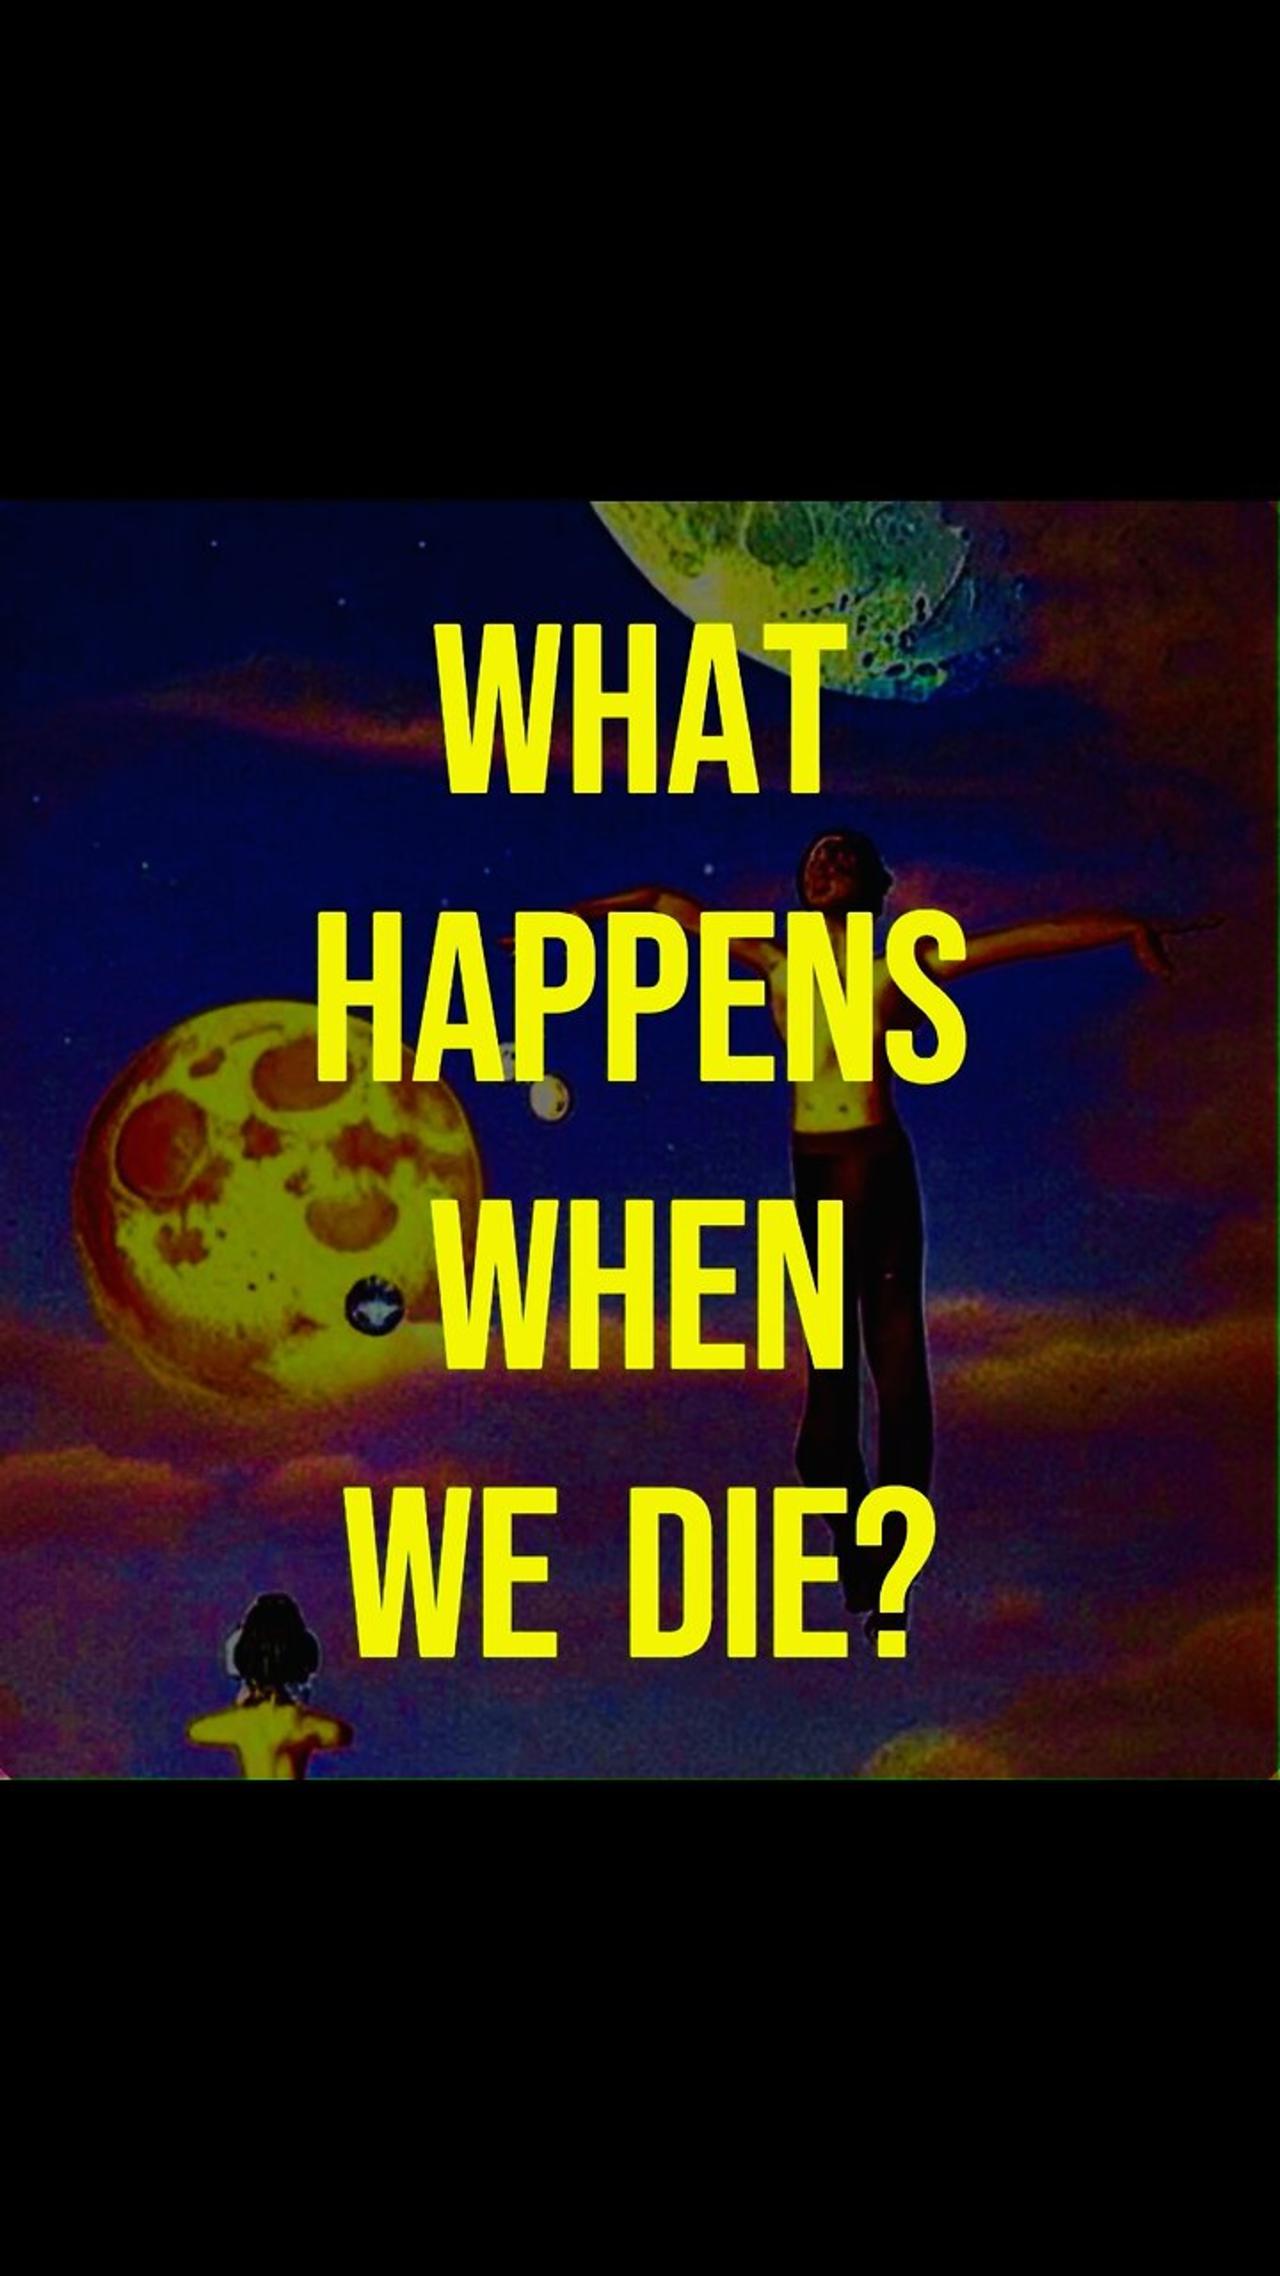 WHAT HAPPENS WHEN WE DIE? | Neil deGrasse Tyson & Larry King